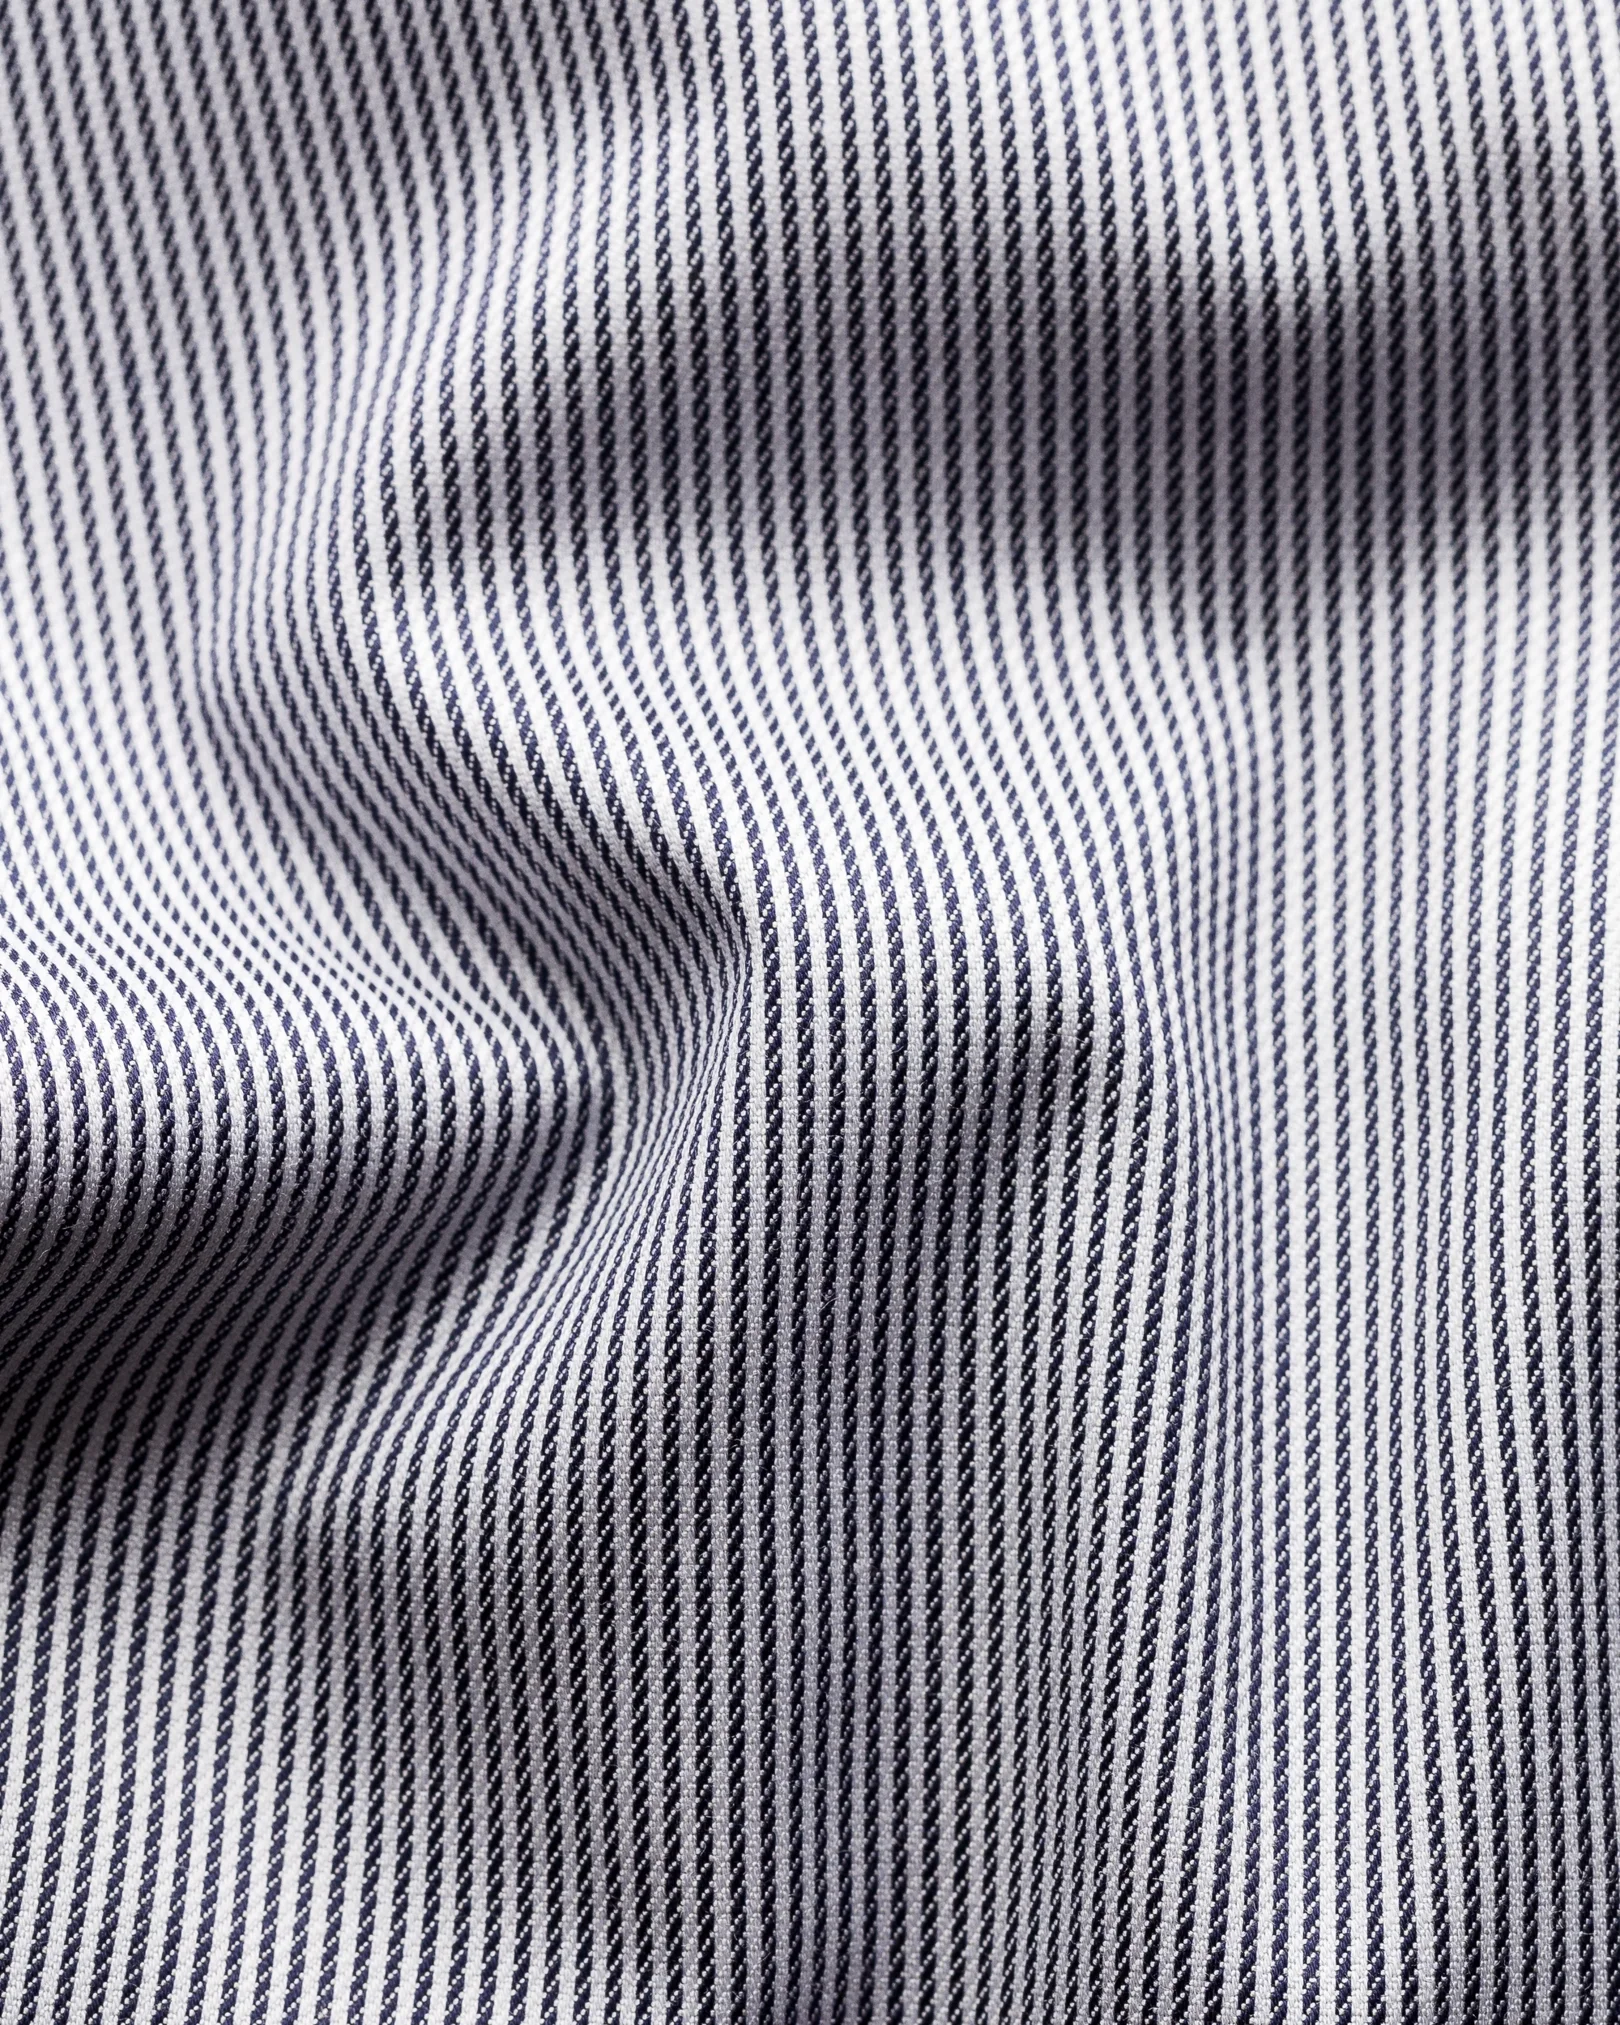 Eton - blue striped stretch twill shirt extra long sleeves